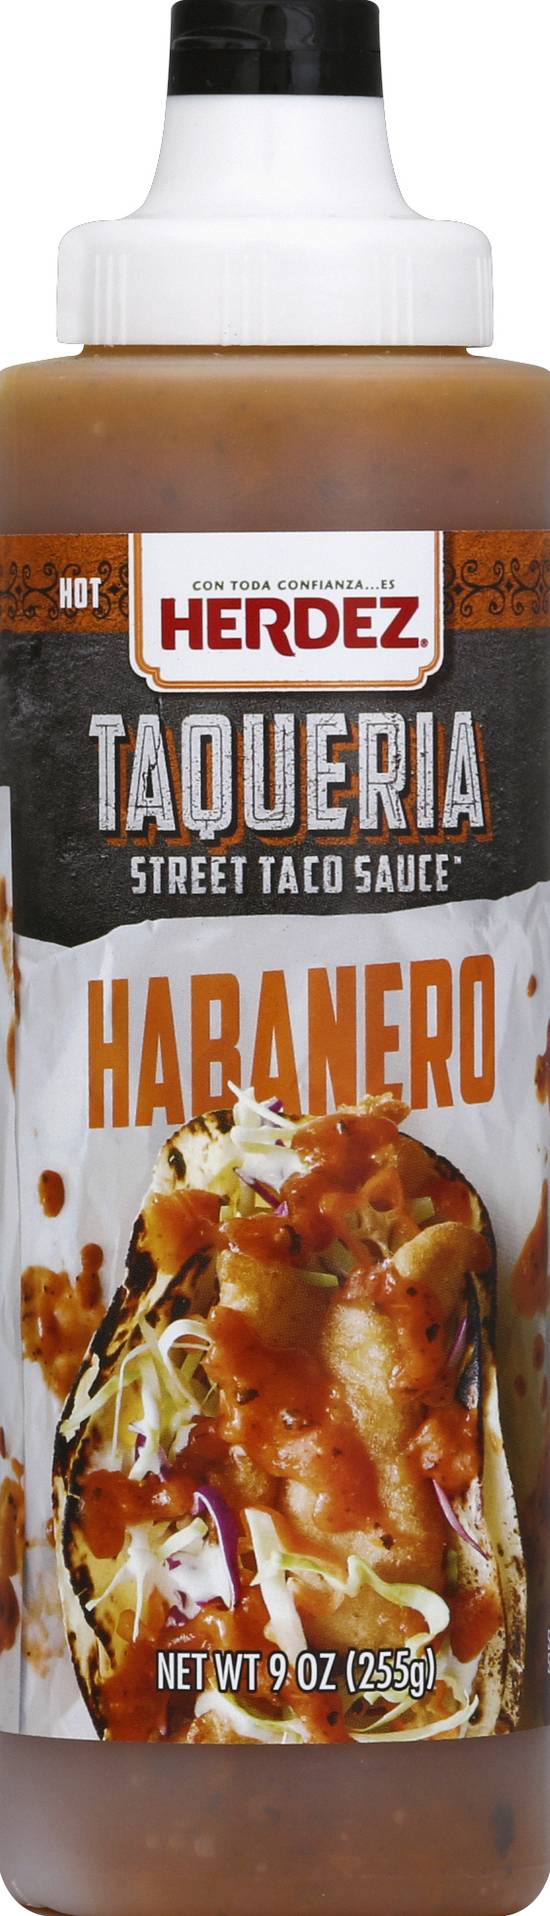 Herdez Hot Habanero Taqueria Street Taco Sauce